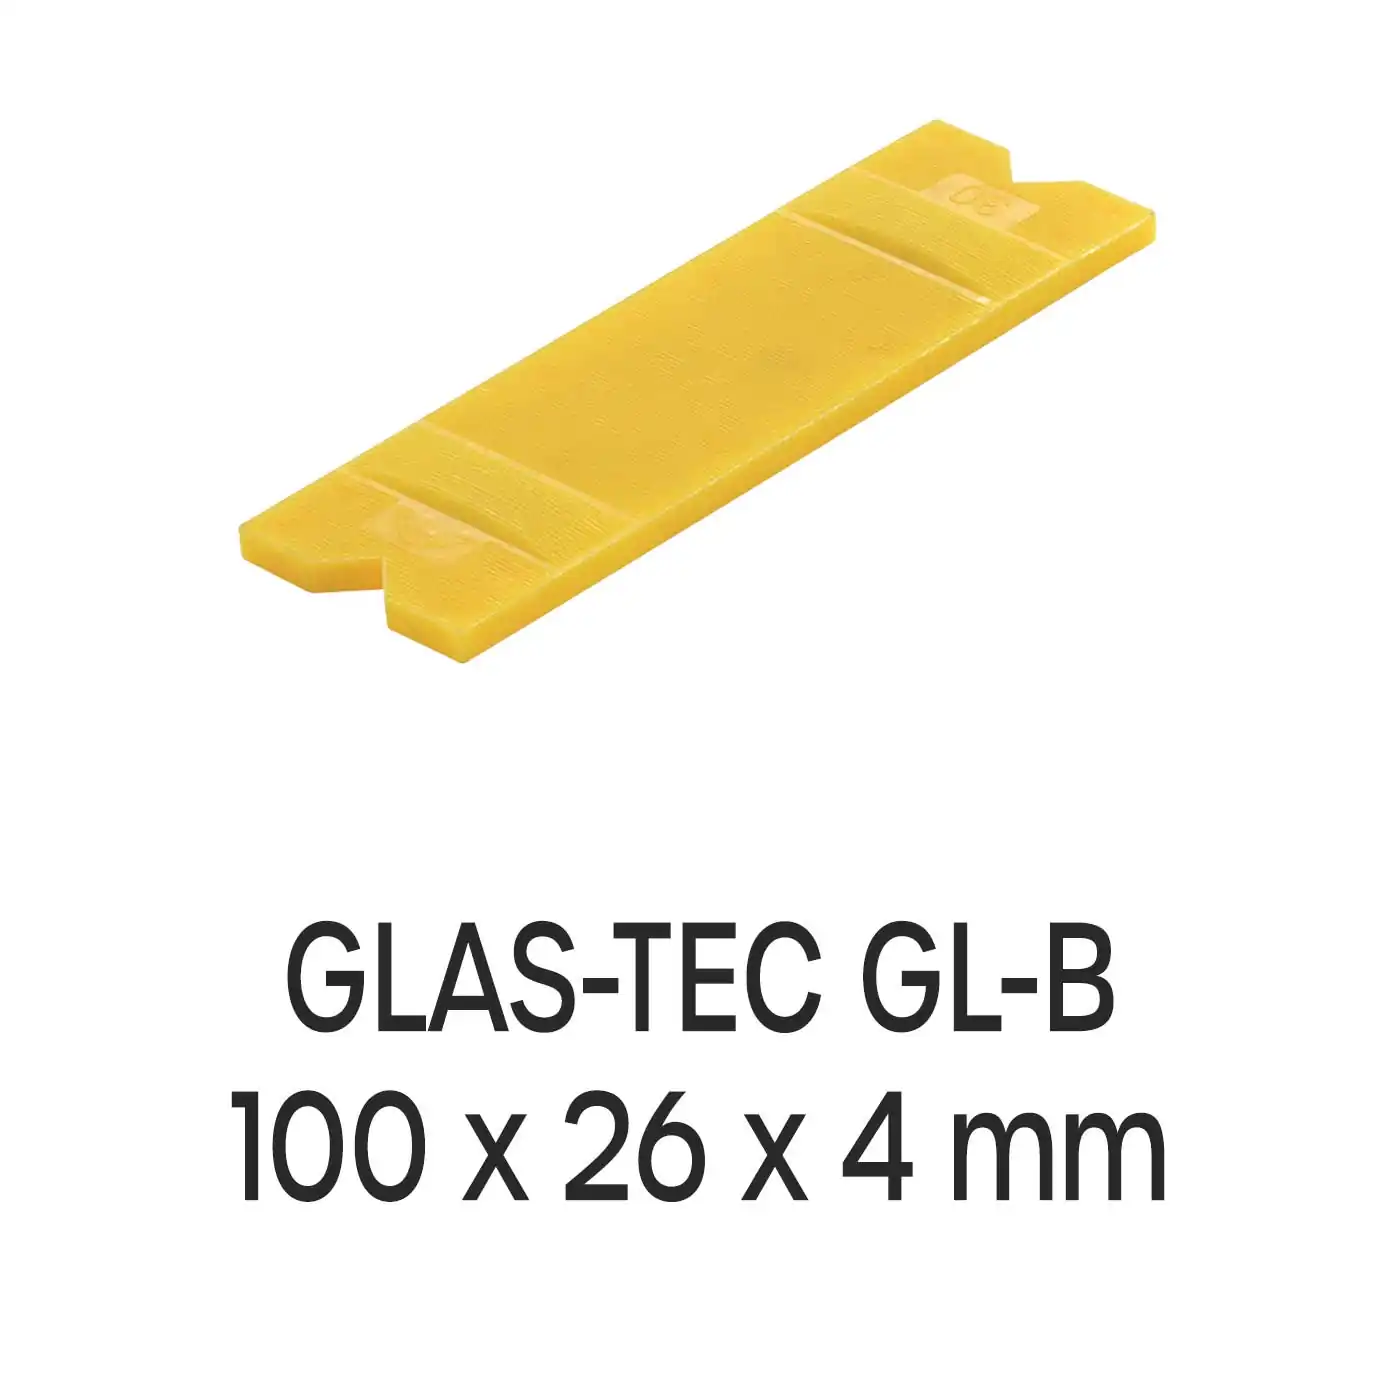 Roto GLAS-TEC GL-B 100 x 26 x 4 mm Verglasungsklötze 1000 Stück